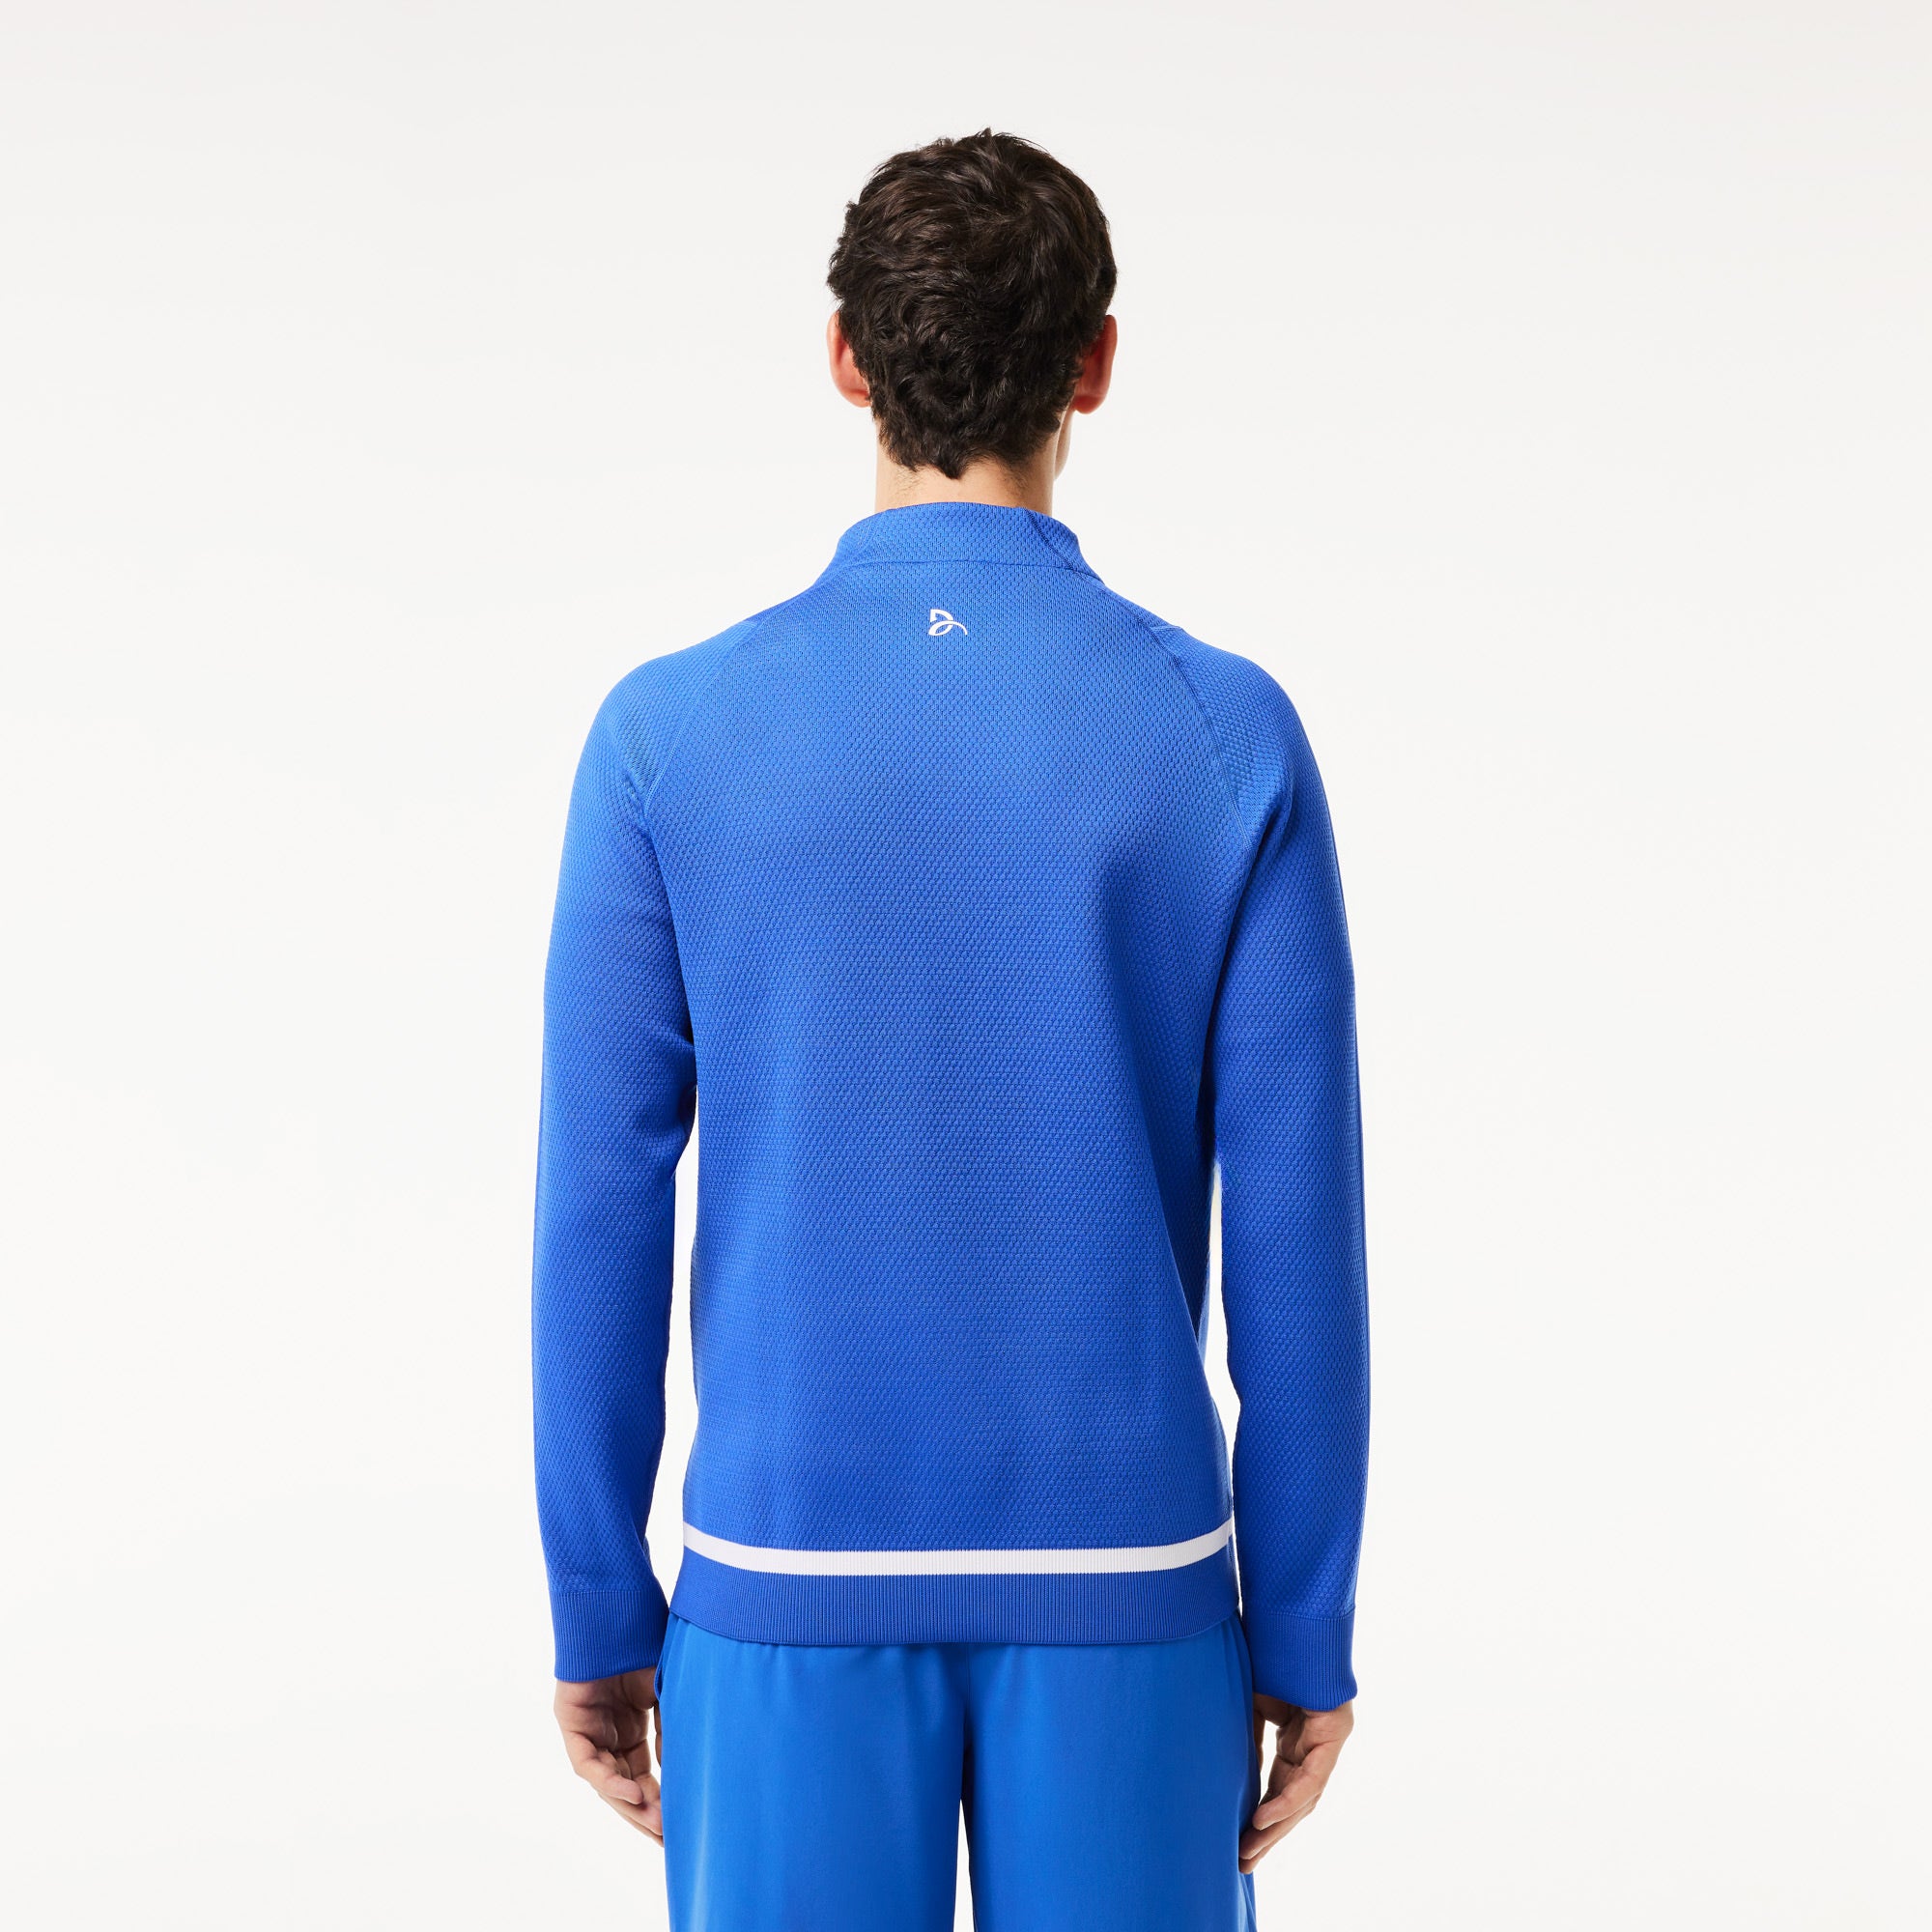 Lacoste x Novak Djokovic Men's Tennis Jacket - Blue (2)